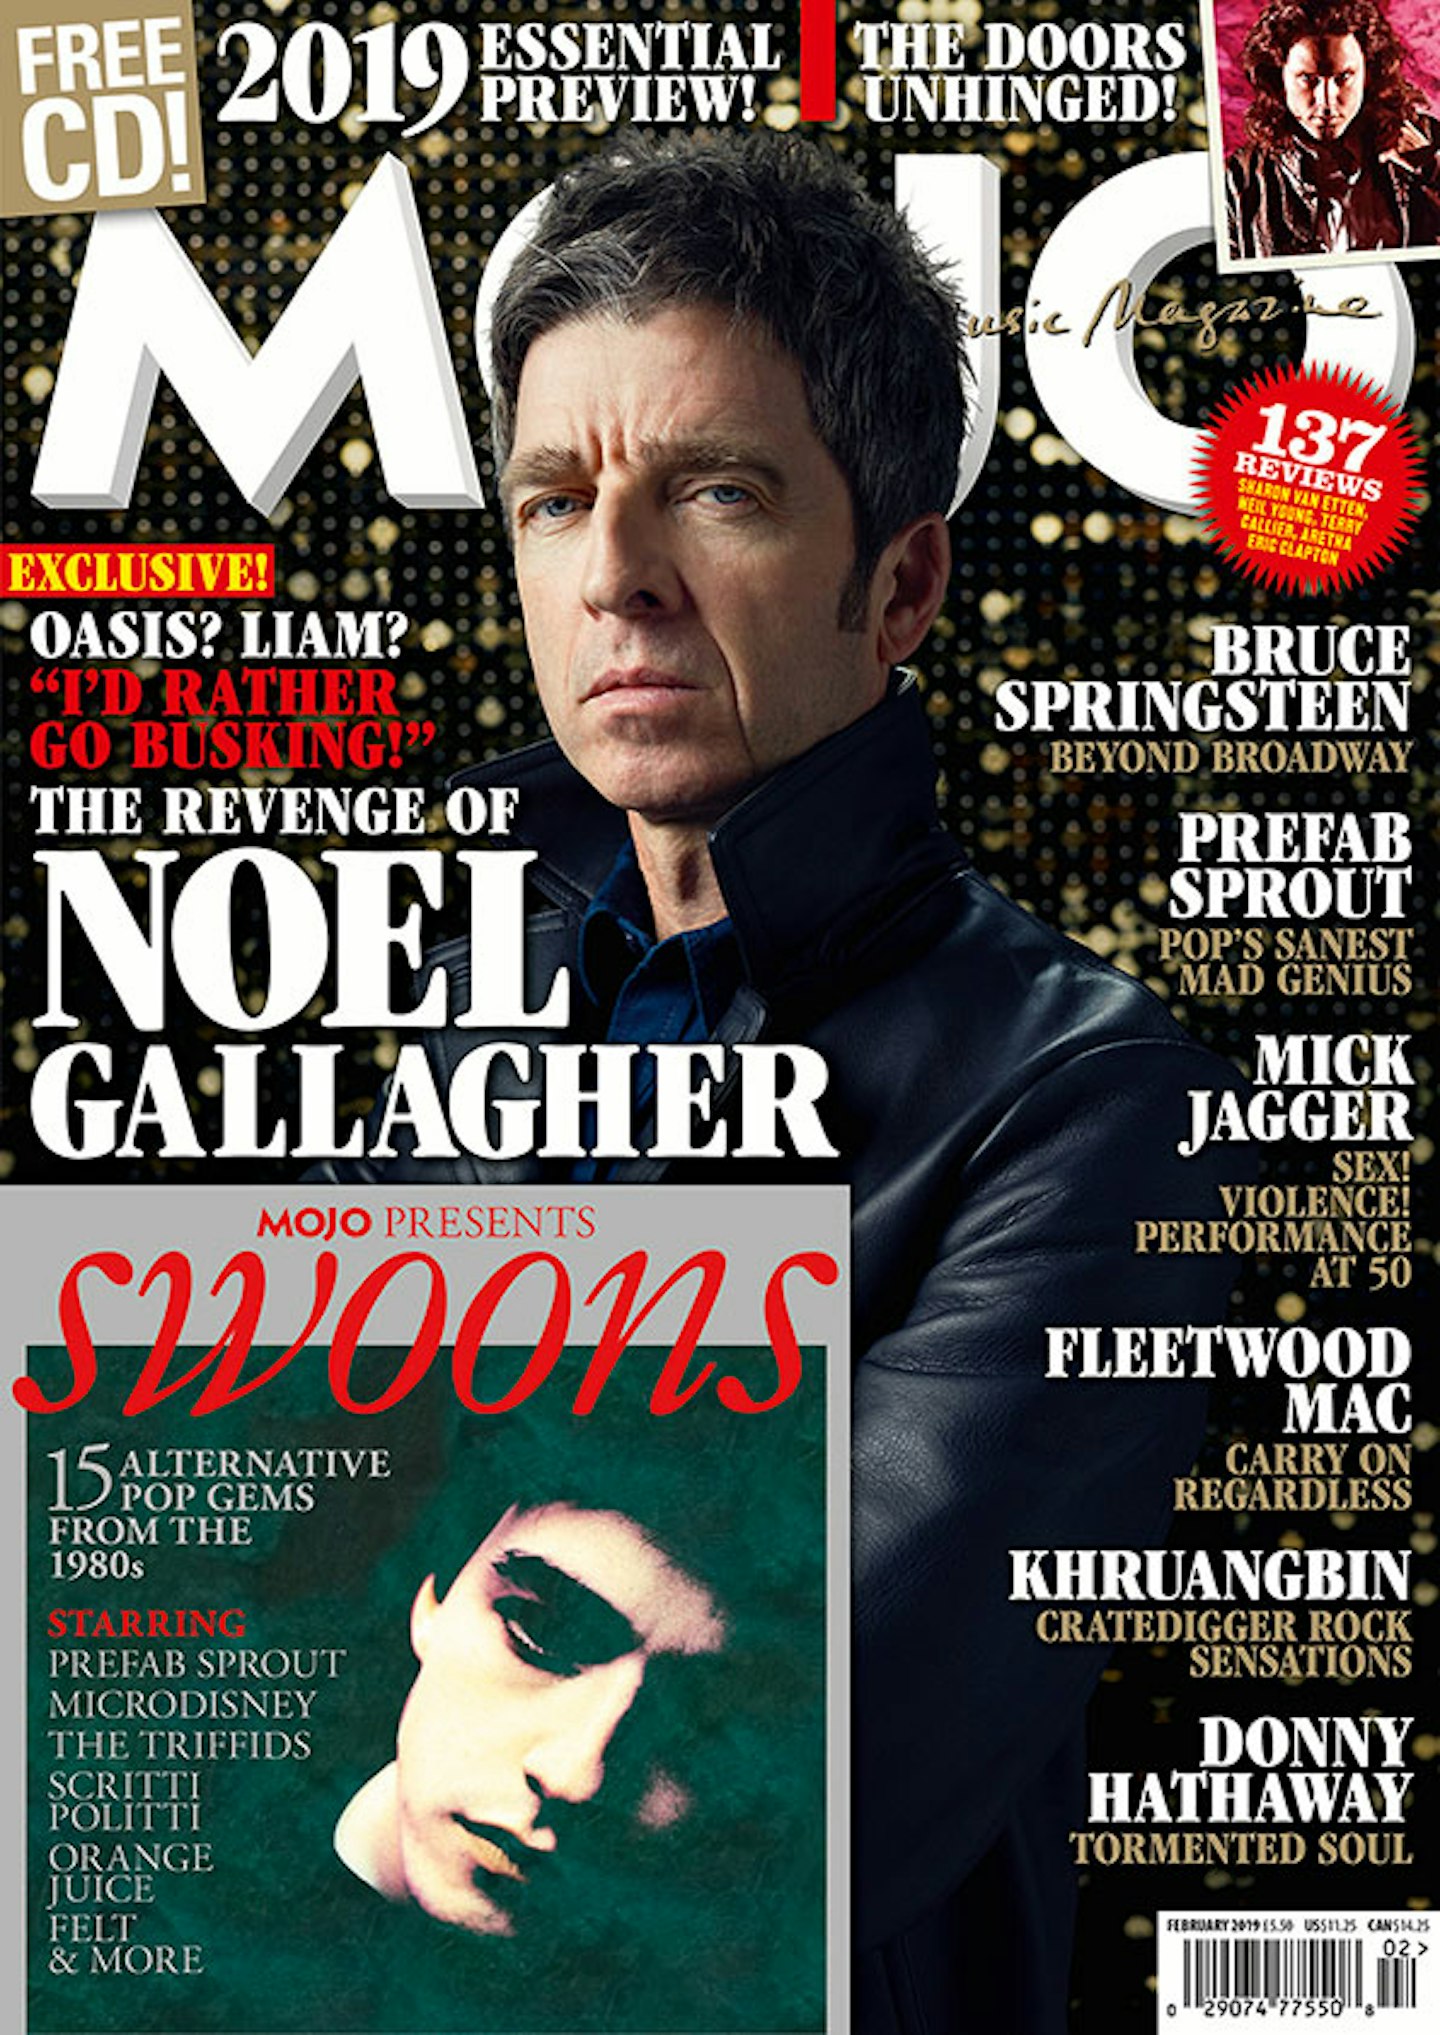 MOJO 303 – February 2019: Noel Gallagher